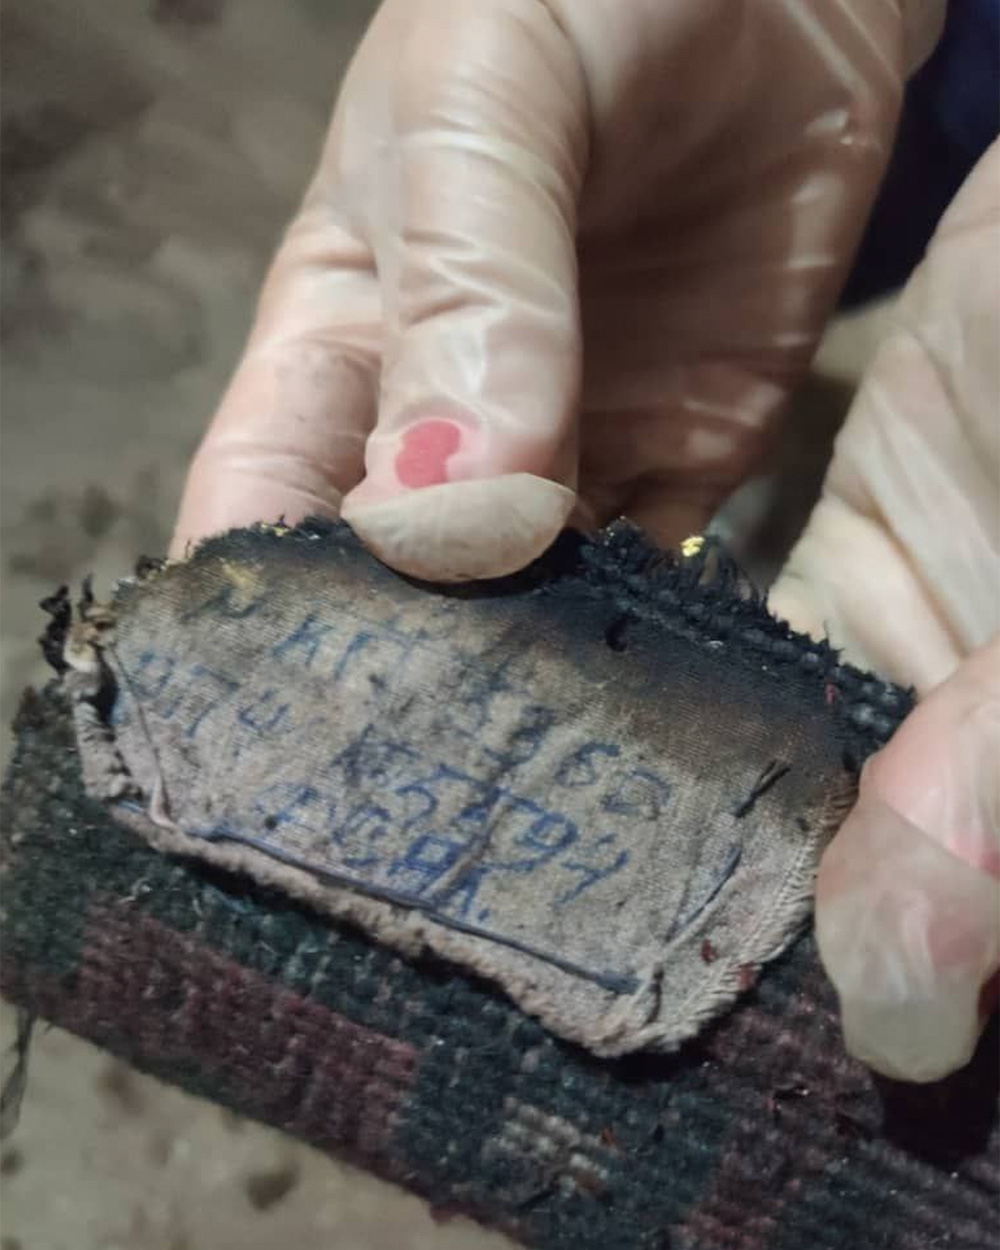 A museum worker holding a damaged artifact